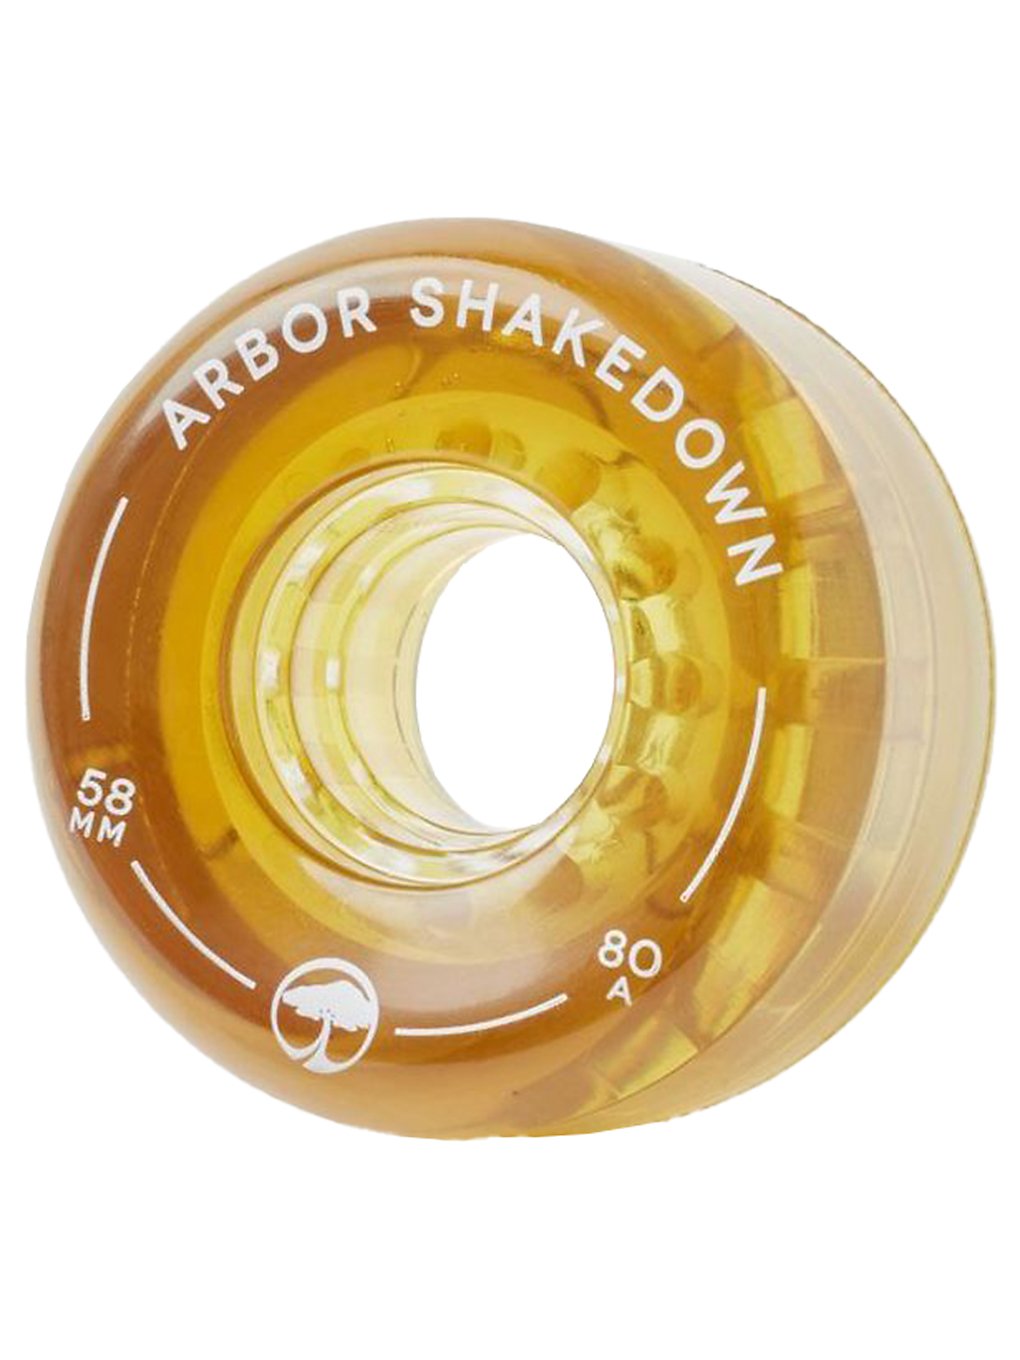 Arbor Shakedown 80a 58mm Wheels amber